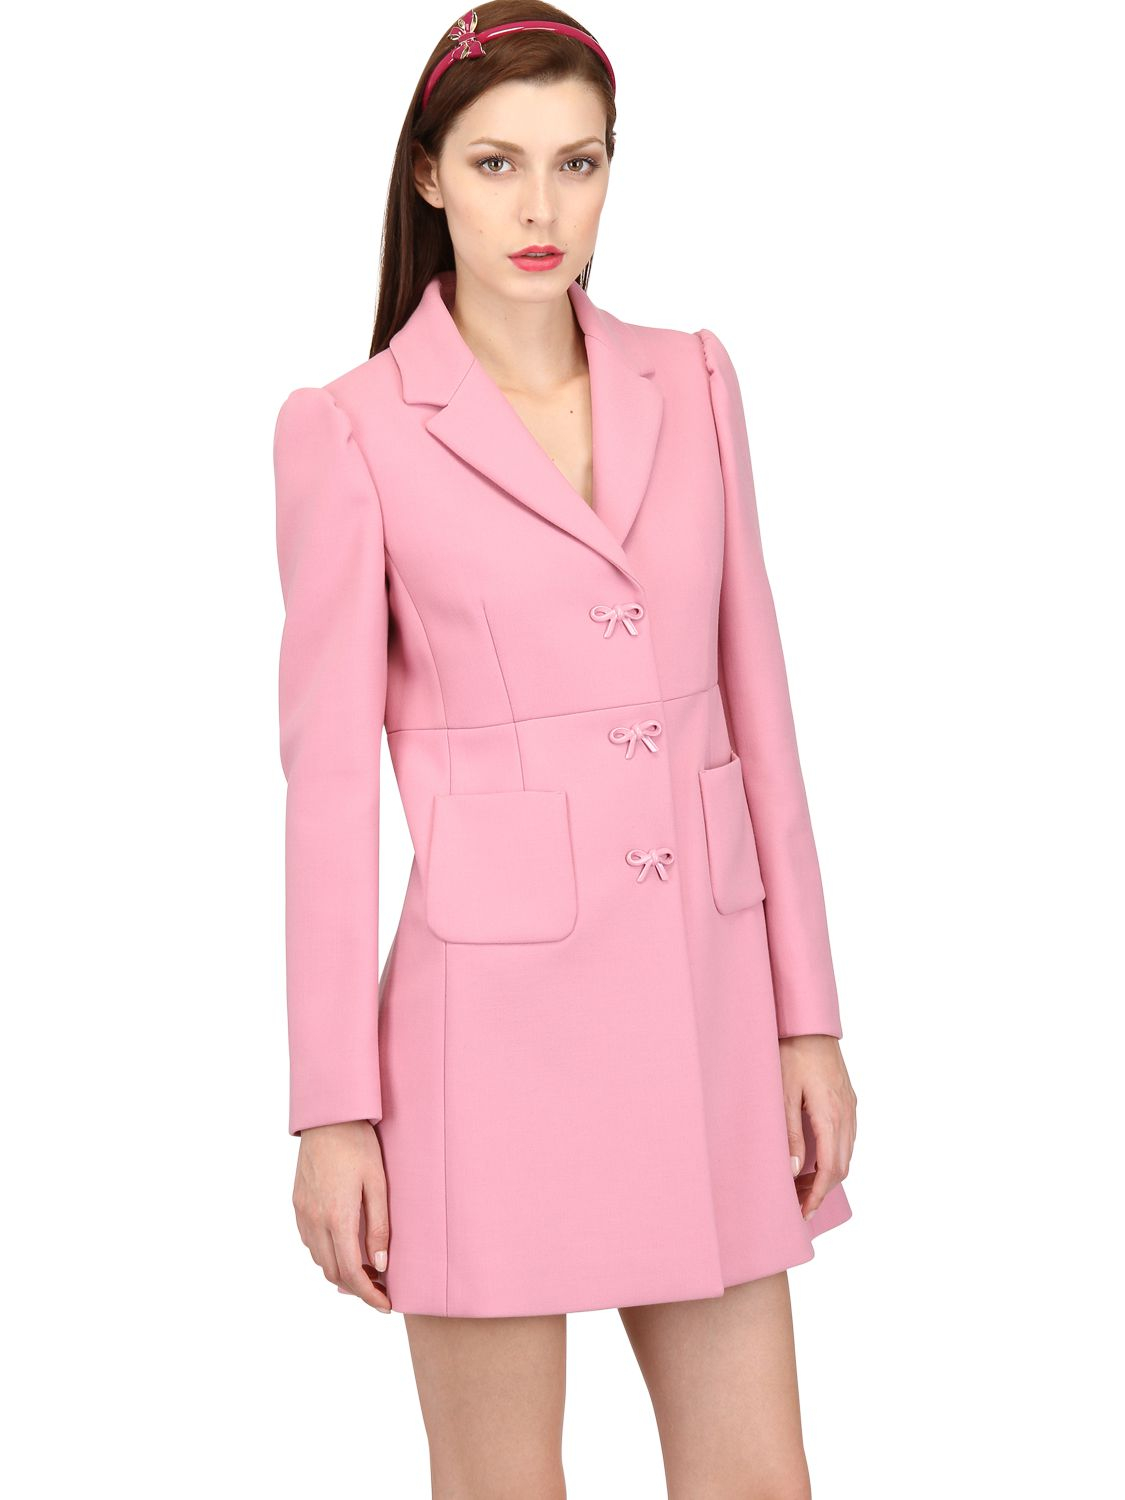 Valentino Pink Coat Deals, 53% OFF | kbtelectronics.com